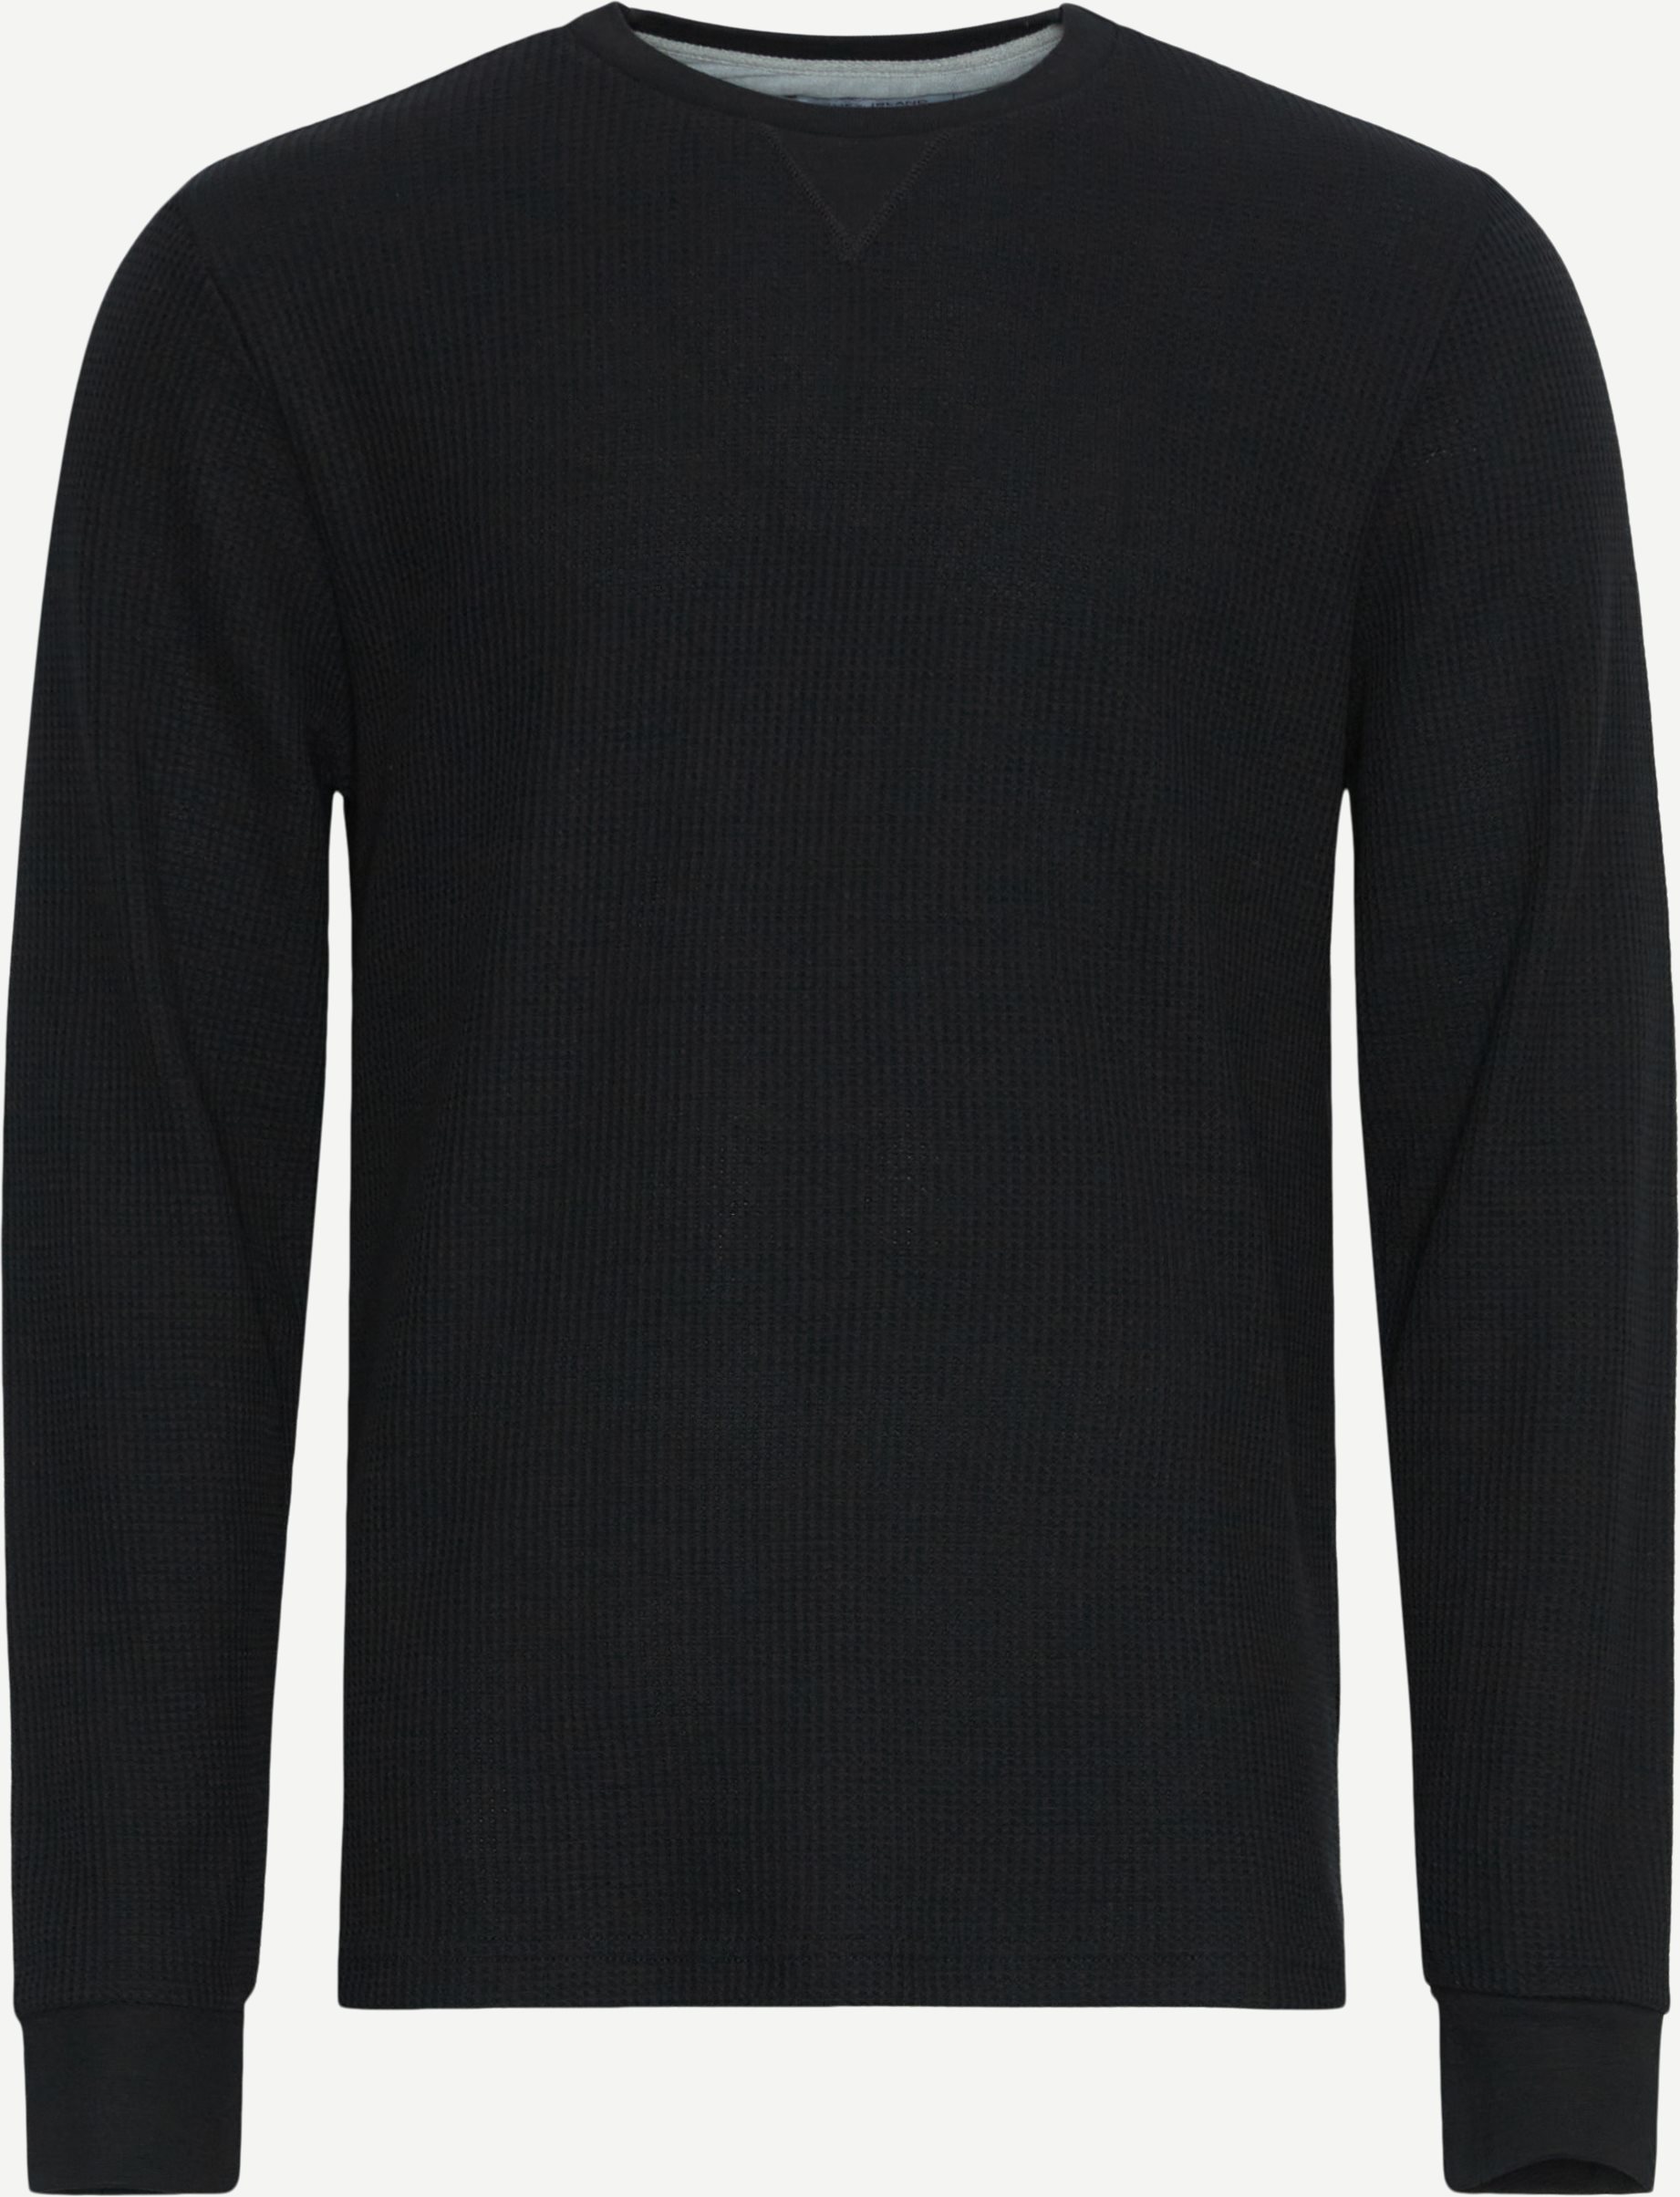 Coney Island Sweatshirts CAGLIARI Black